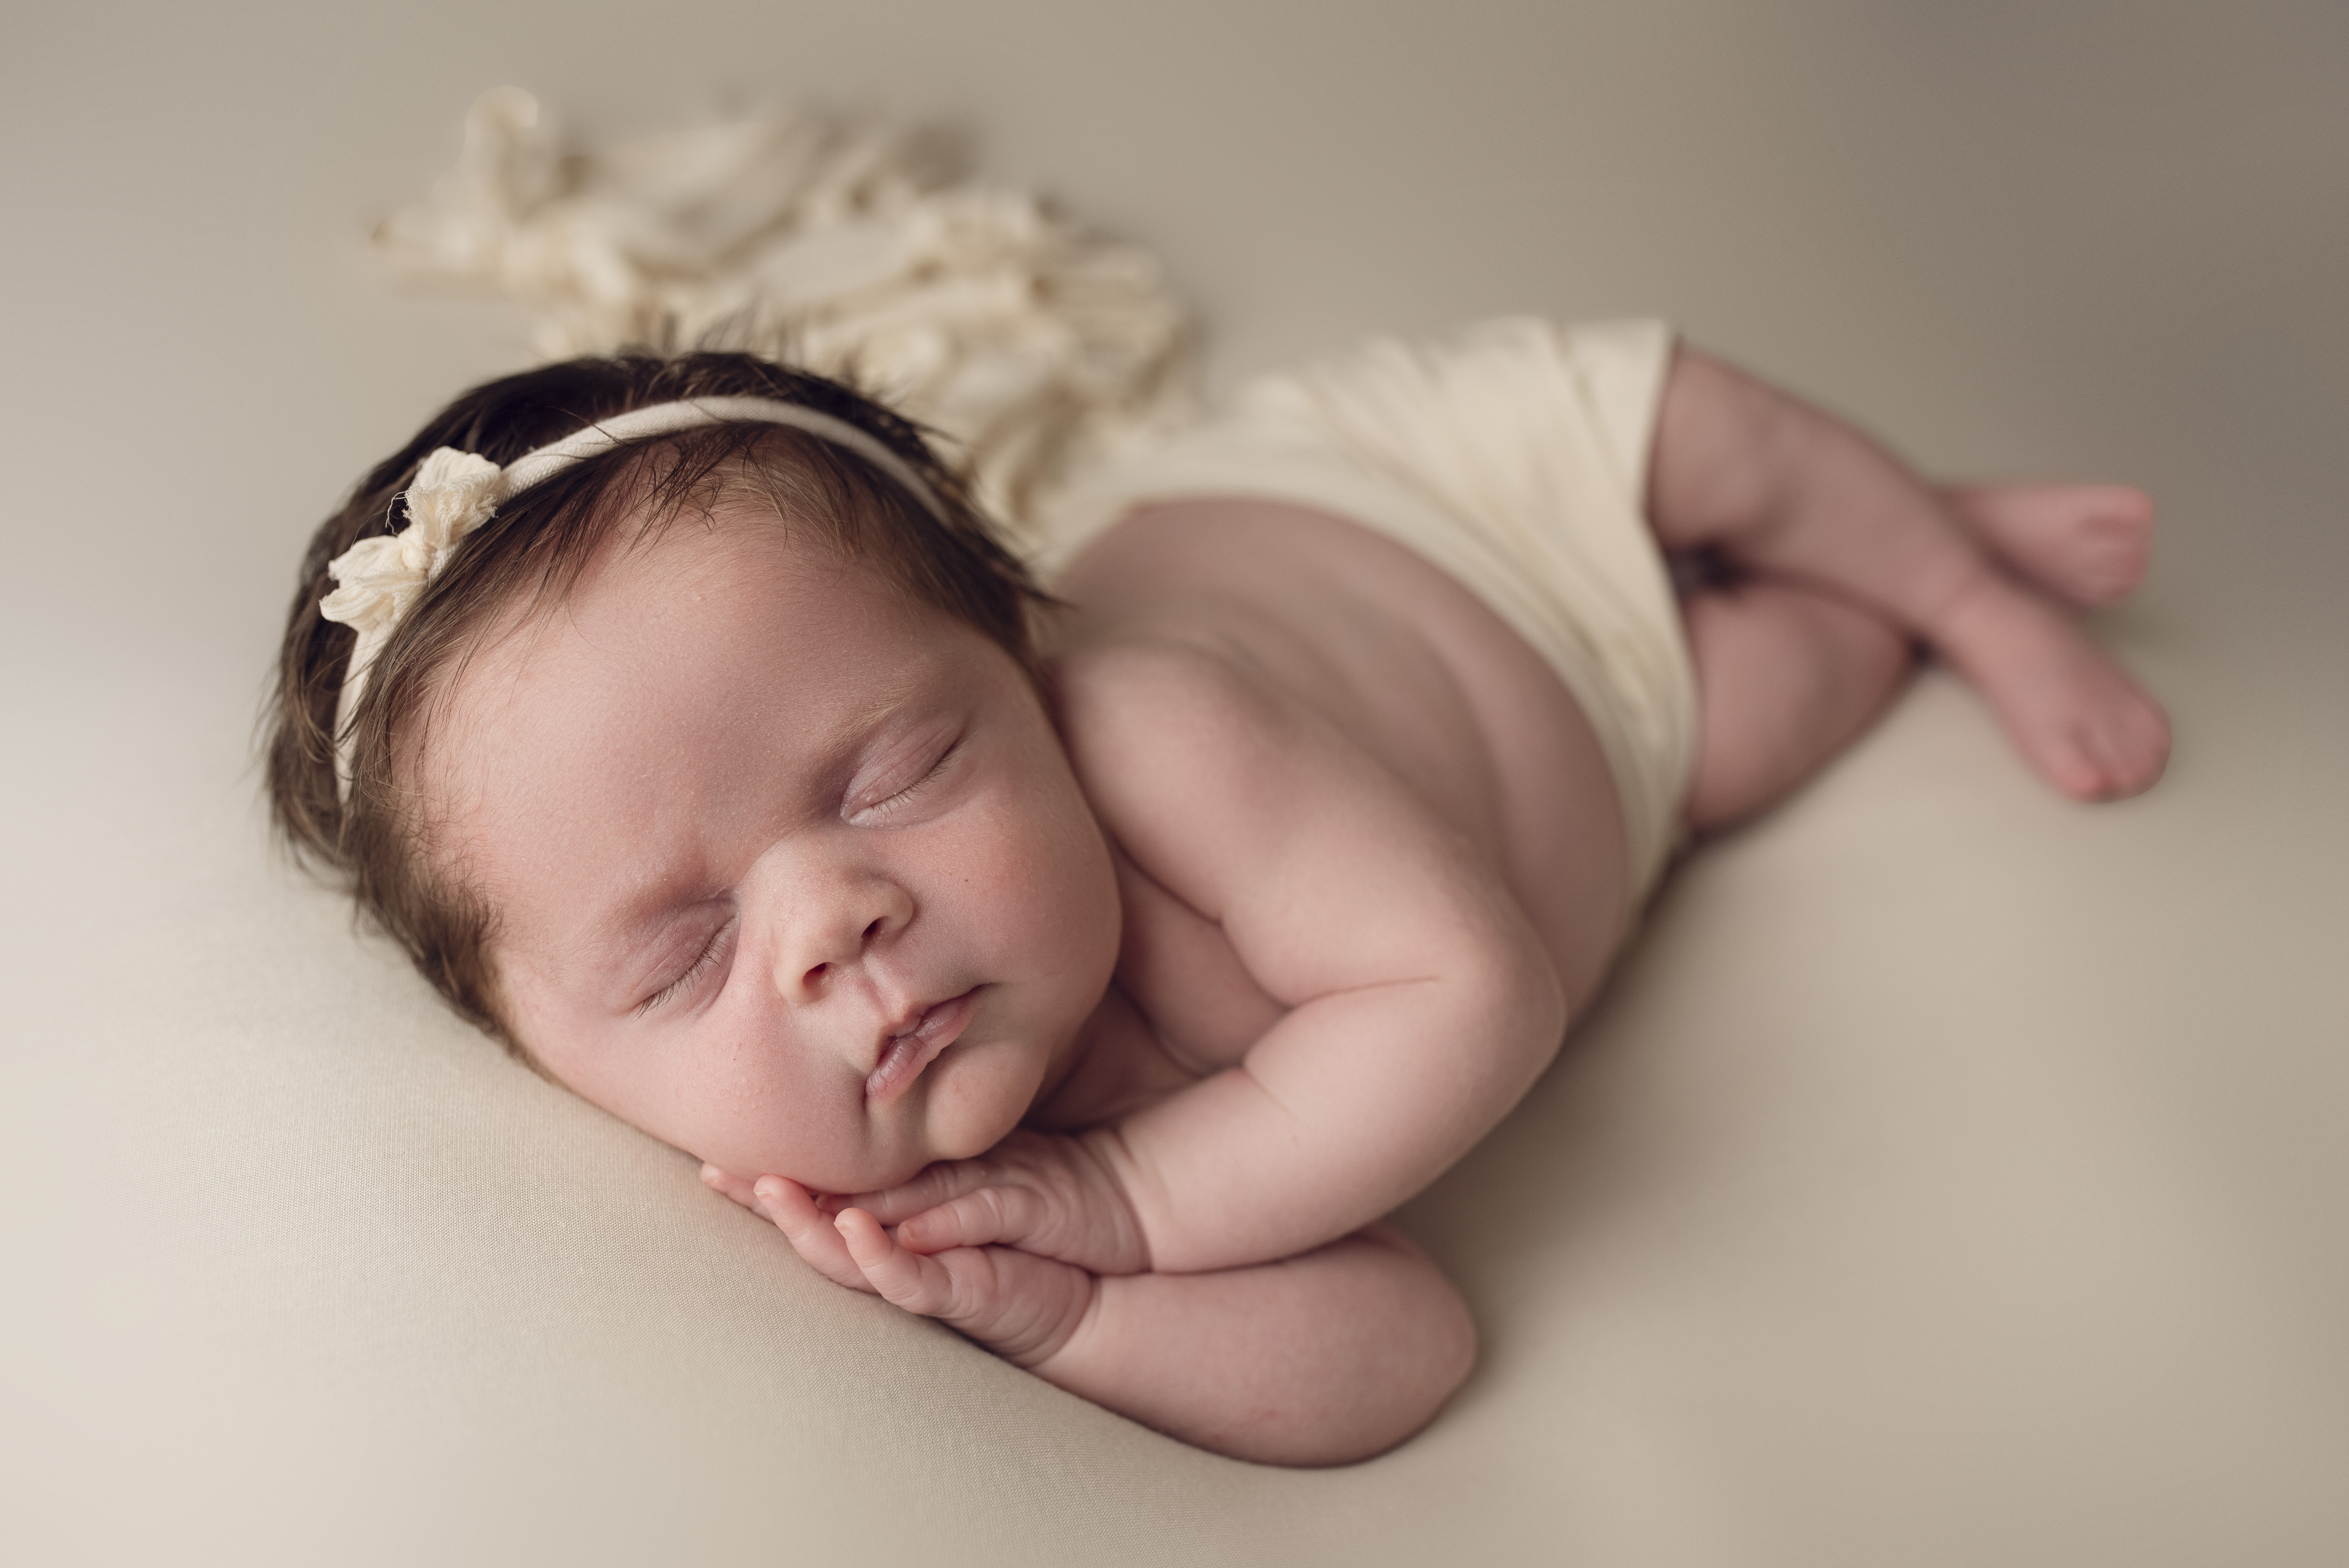 grand rapids michigan newborn photography baby sleeping